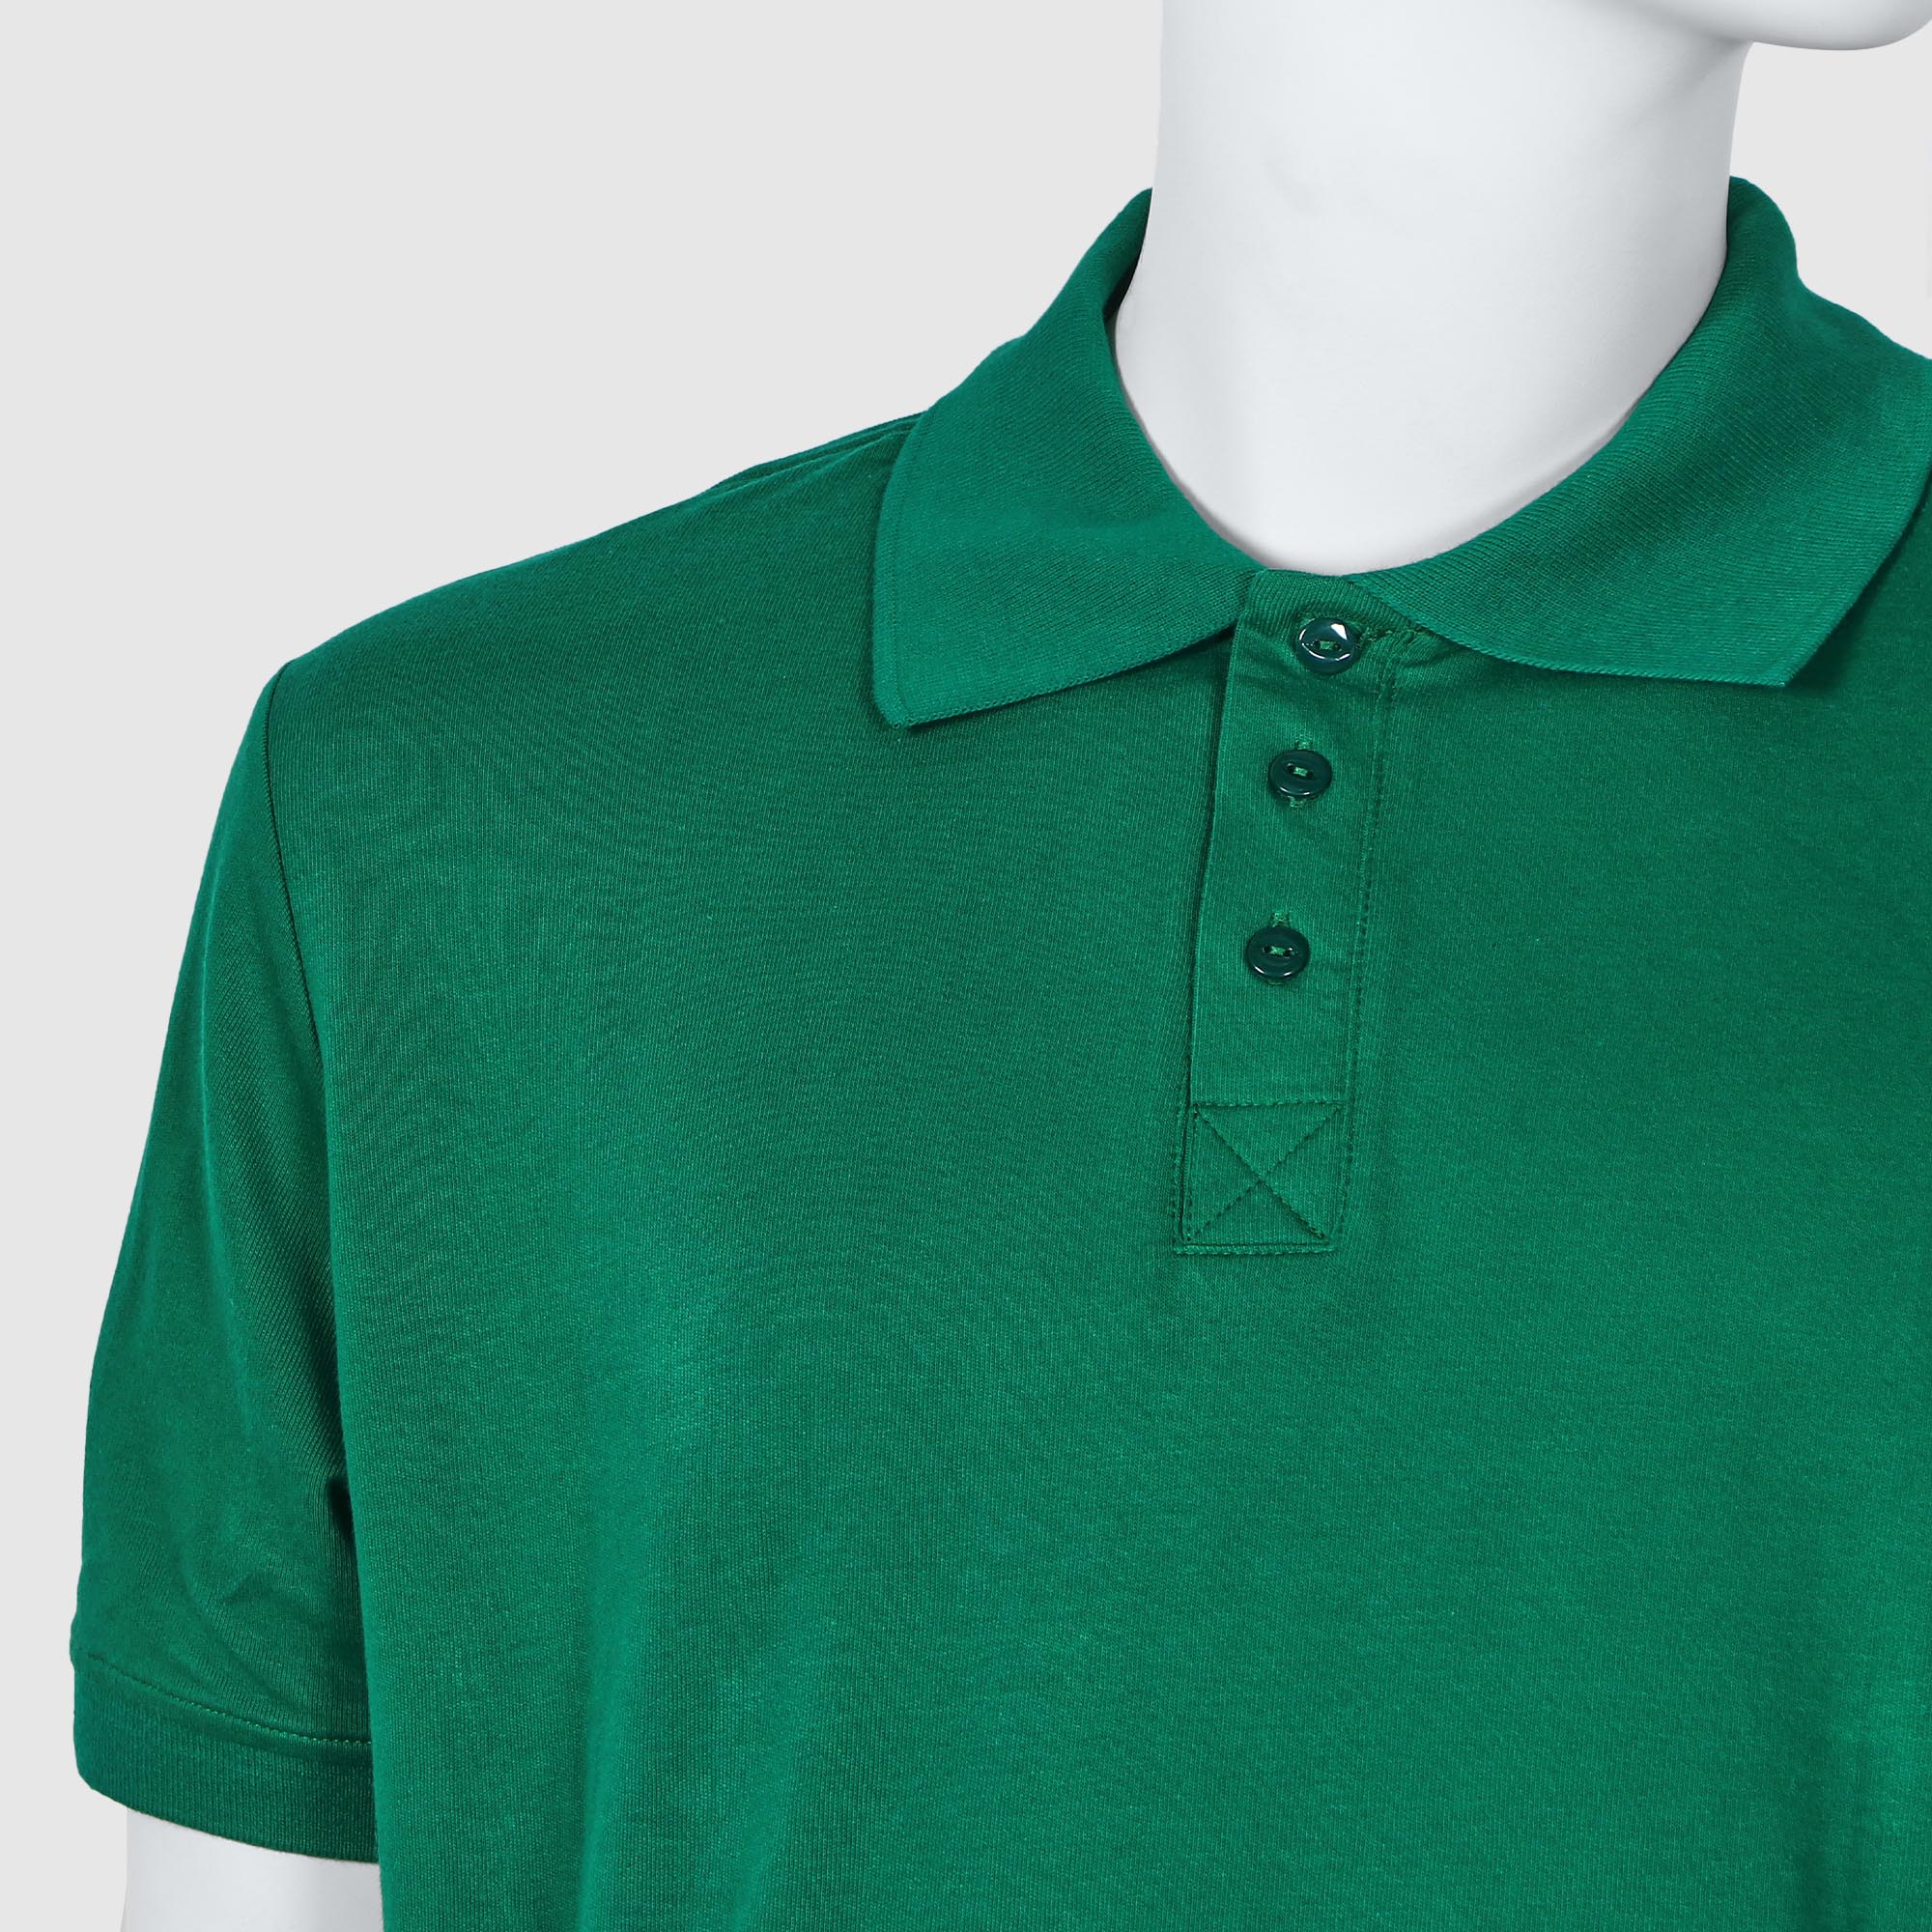 Мужская футболка-поло Diva Teks зелёная (DTD-09), цвет зелёный, размер 44-46 - фото 3